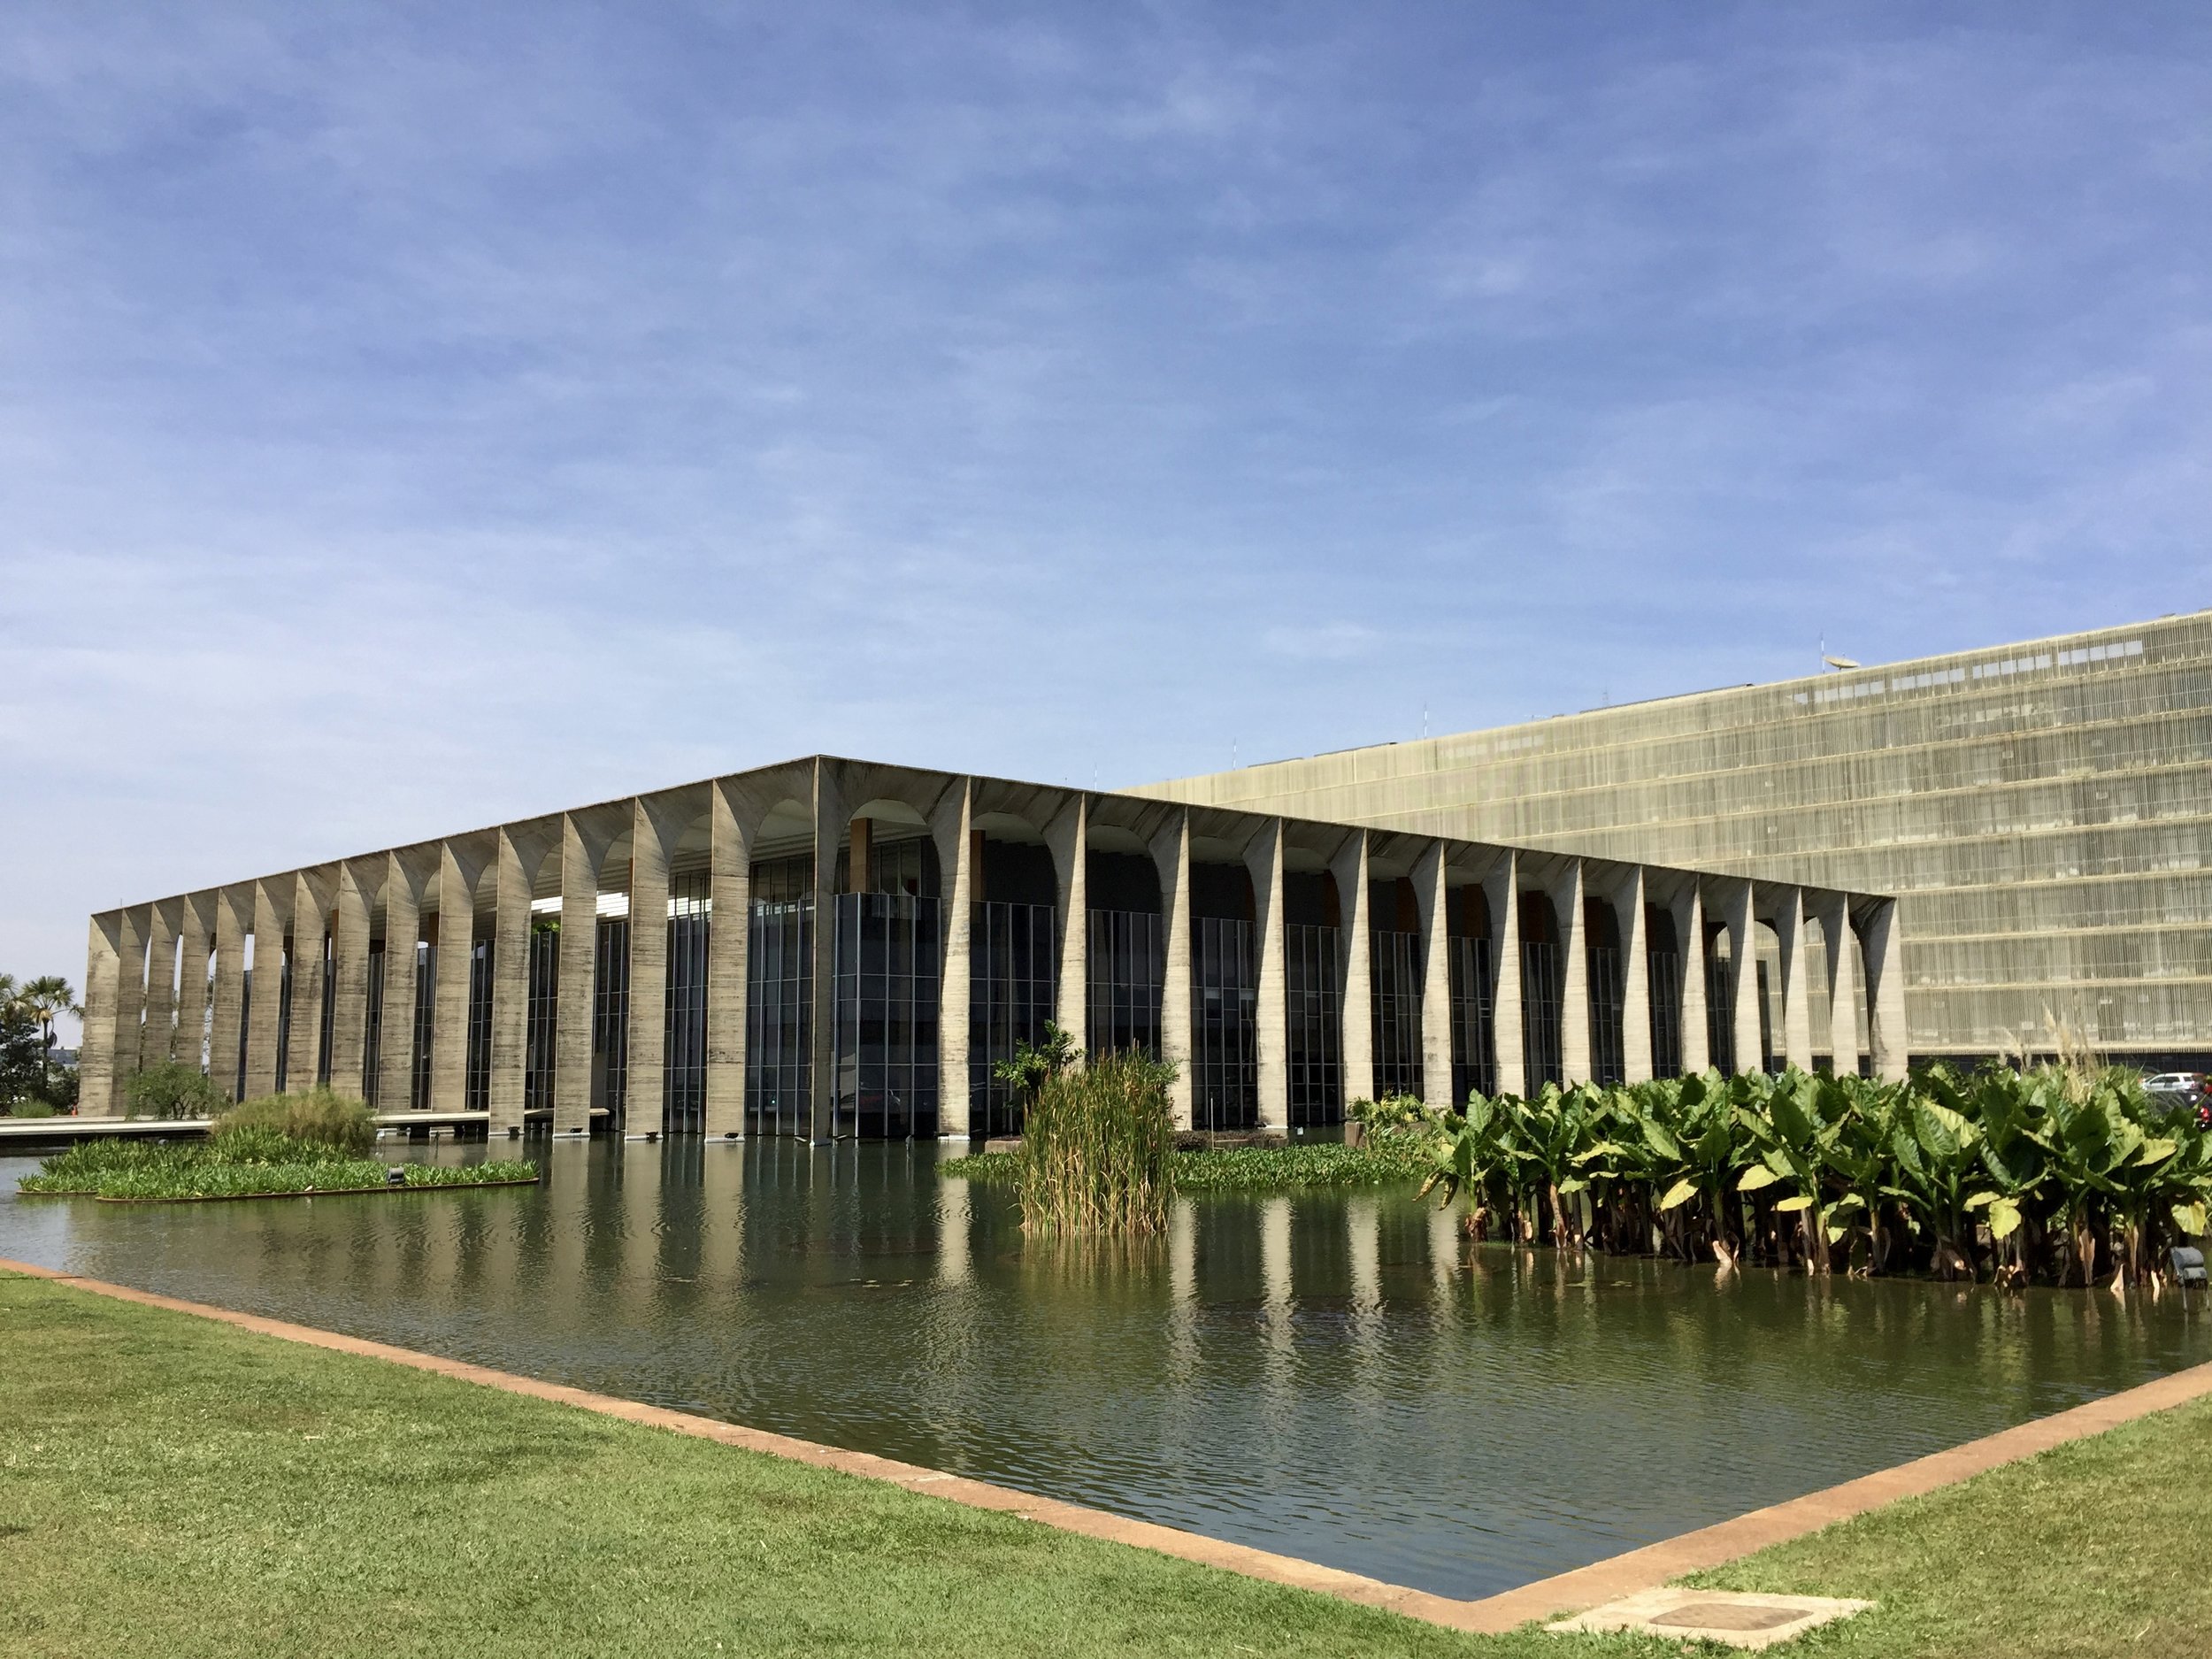 Itamaraty Palace (Ministry of Foreign Affairs, Brazil), design by Oscar Niemeyer